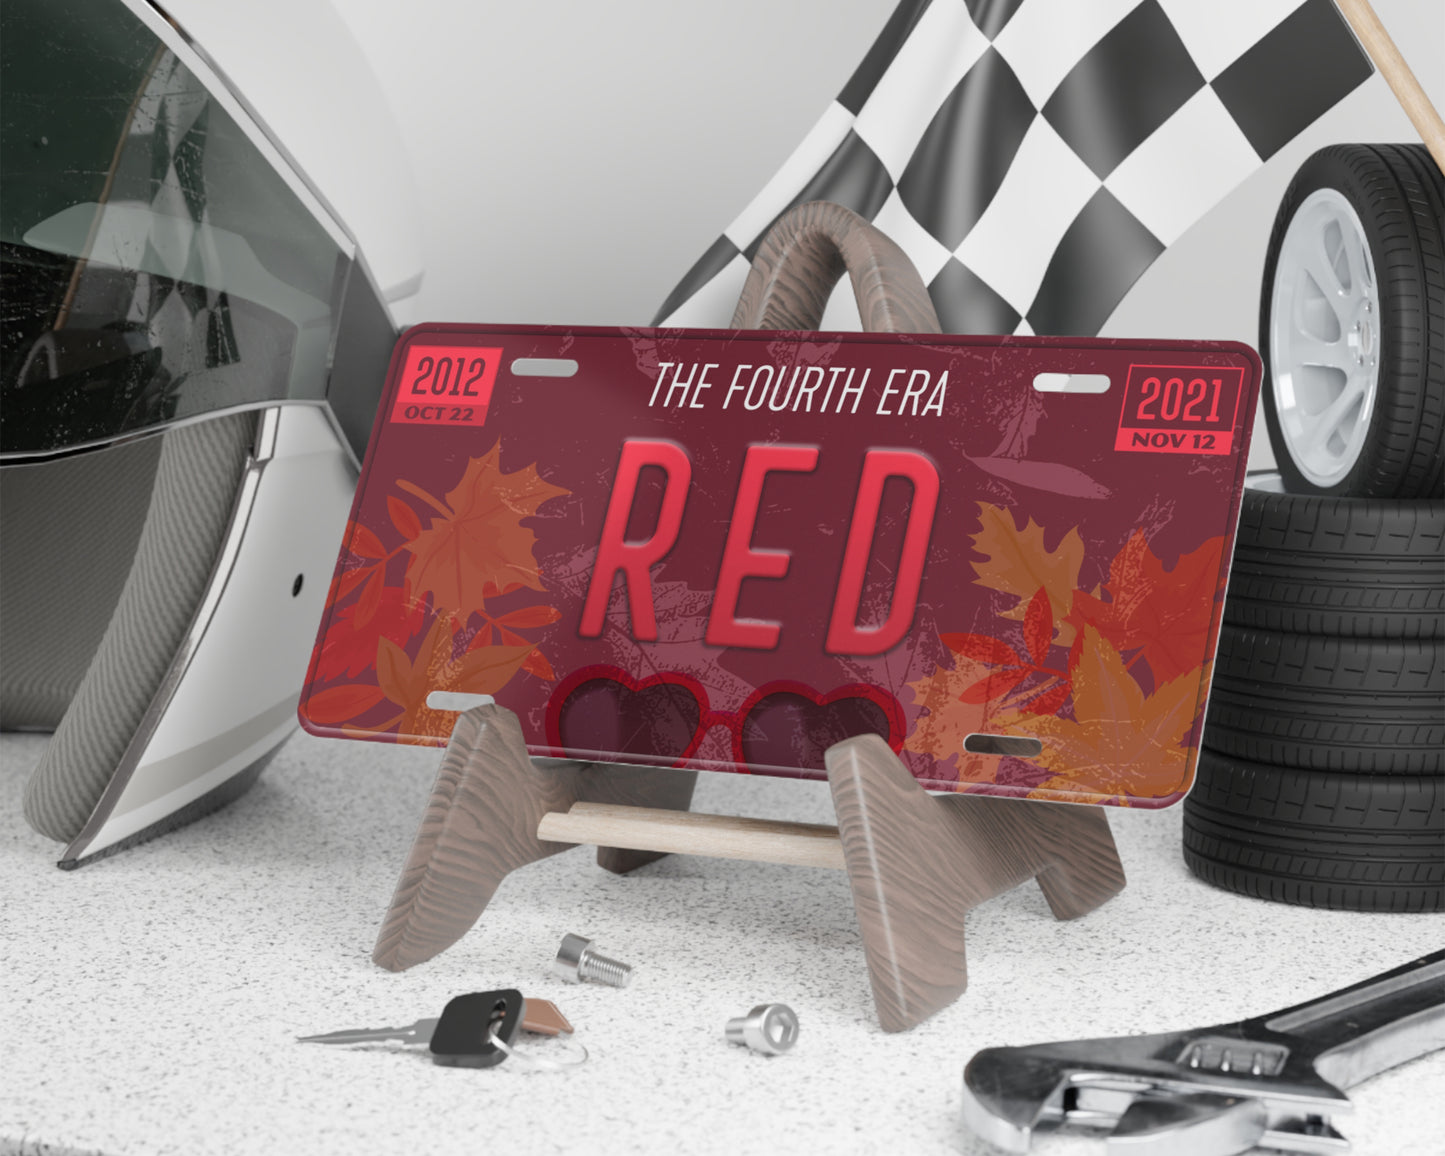 Red era license plate